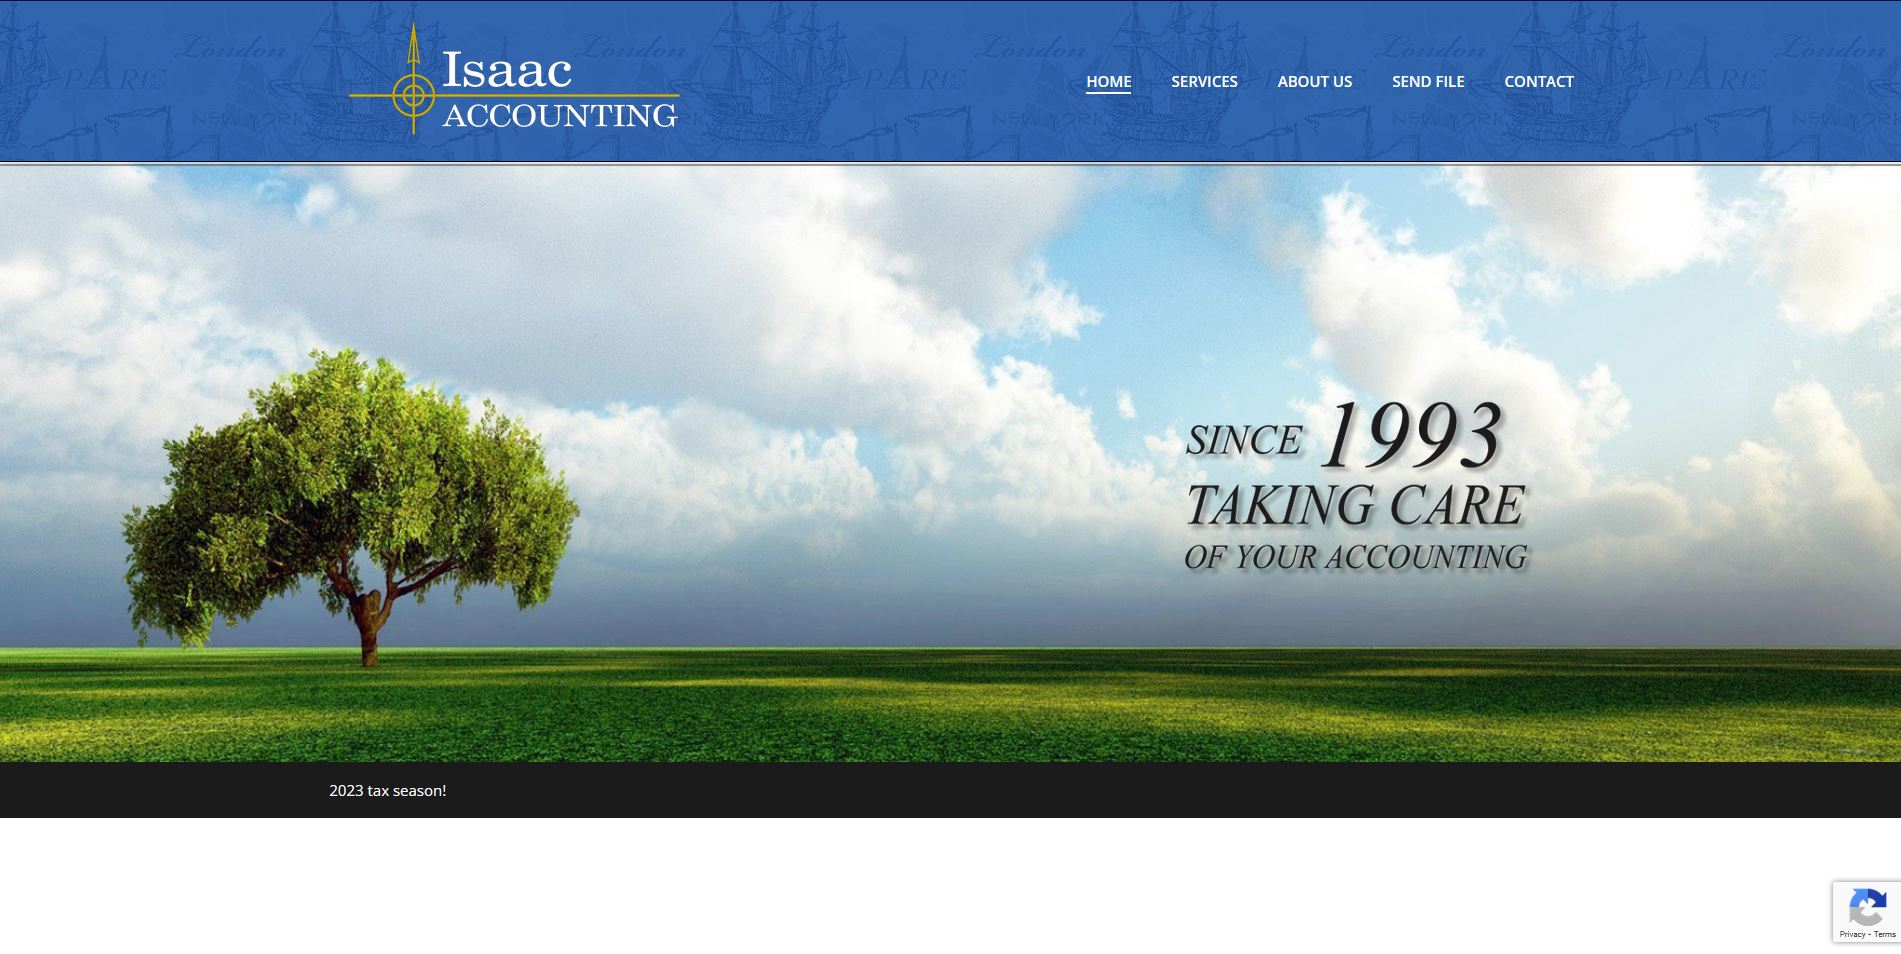 Isaac Accounting website